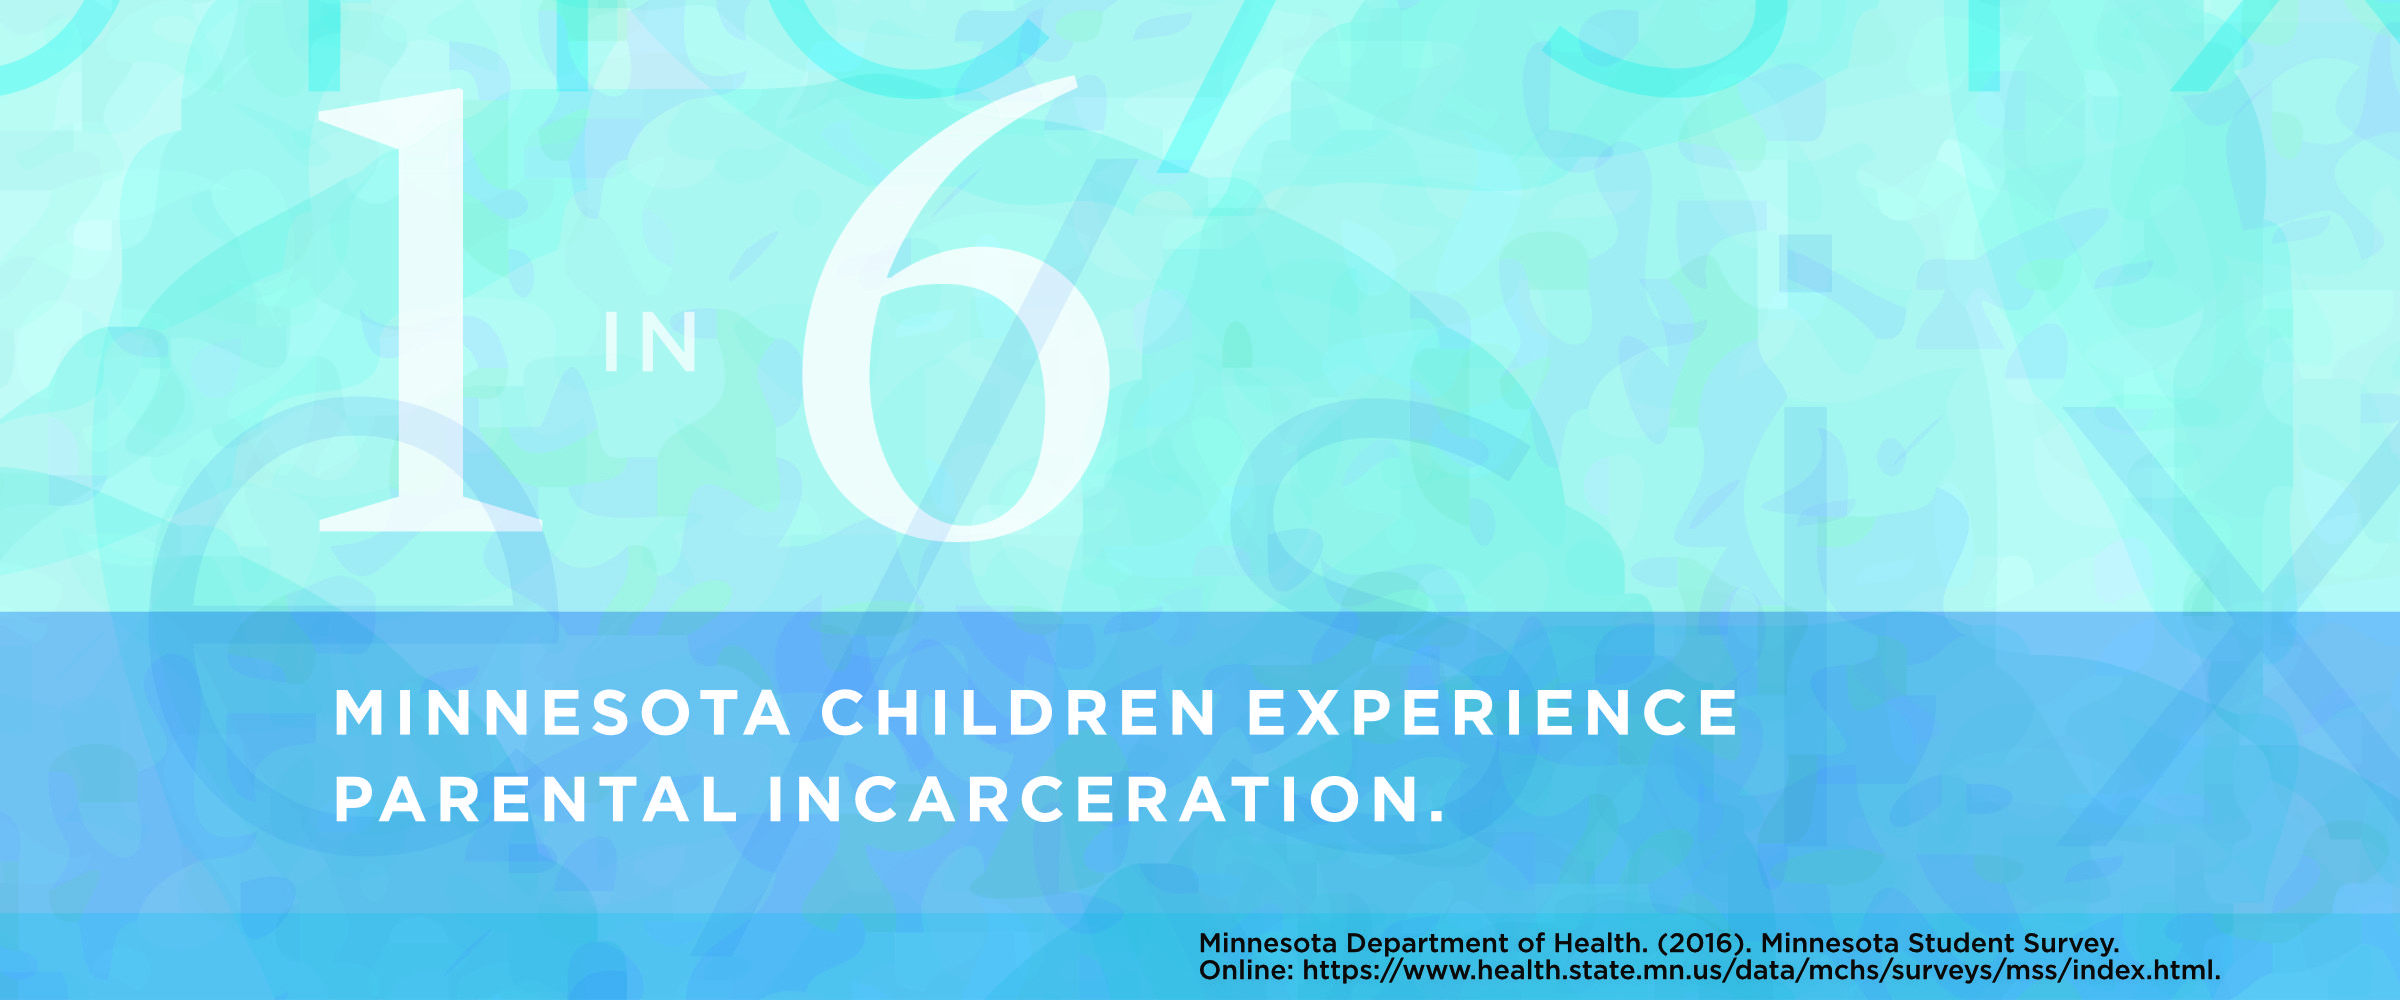 1 in 6 Minnesota children experience parental incarceration.